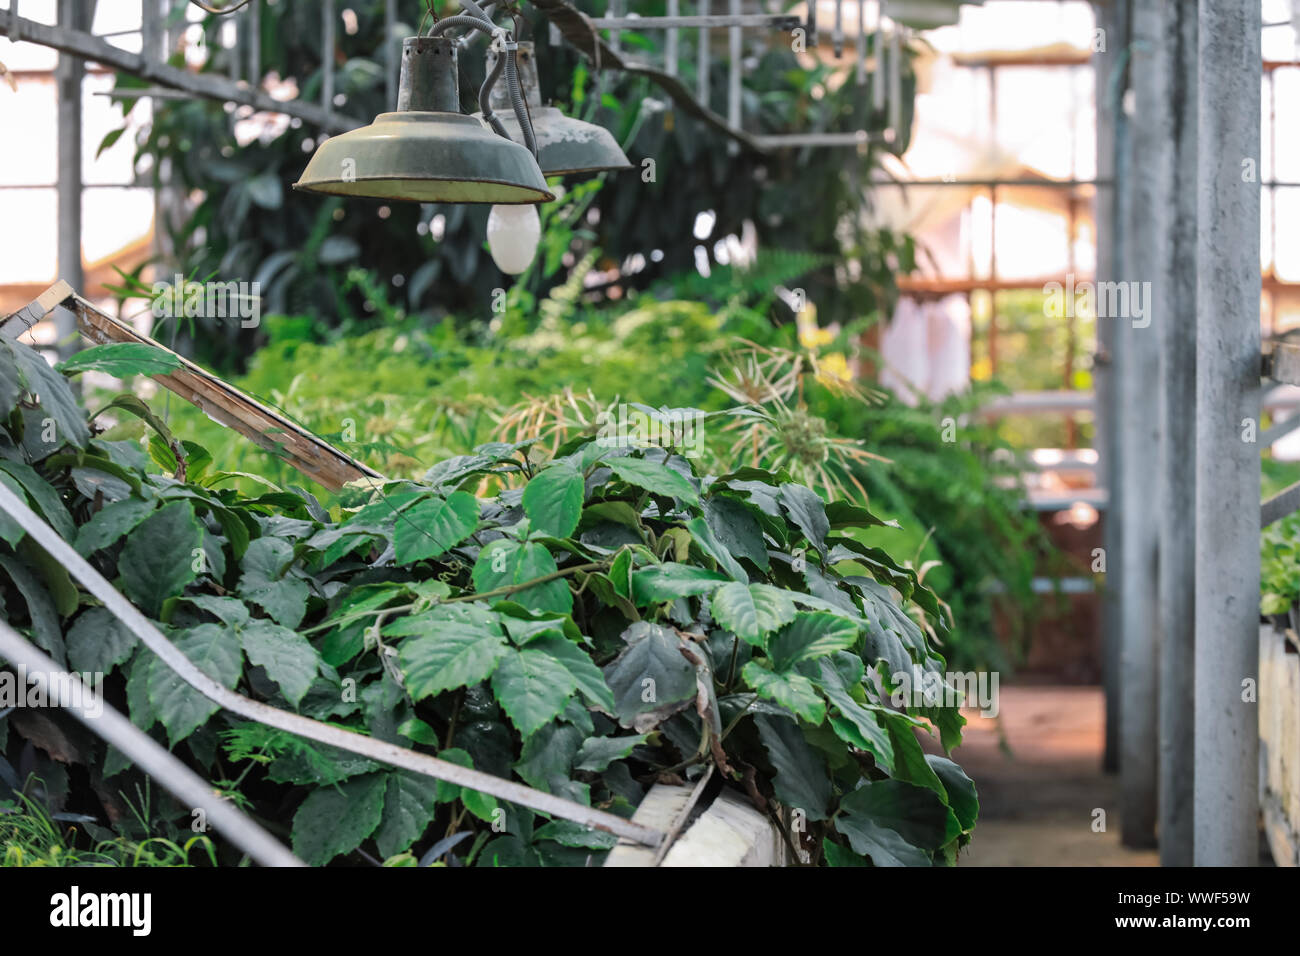 Abundance of plants in greenhouse Stock Photo